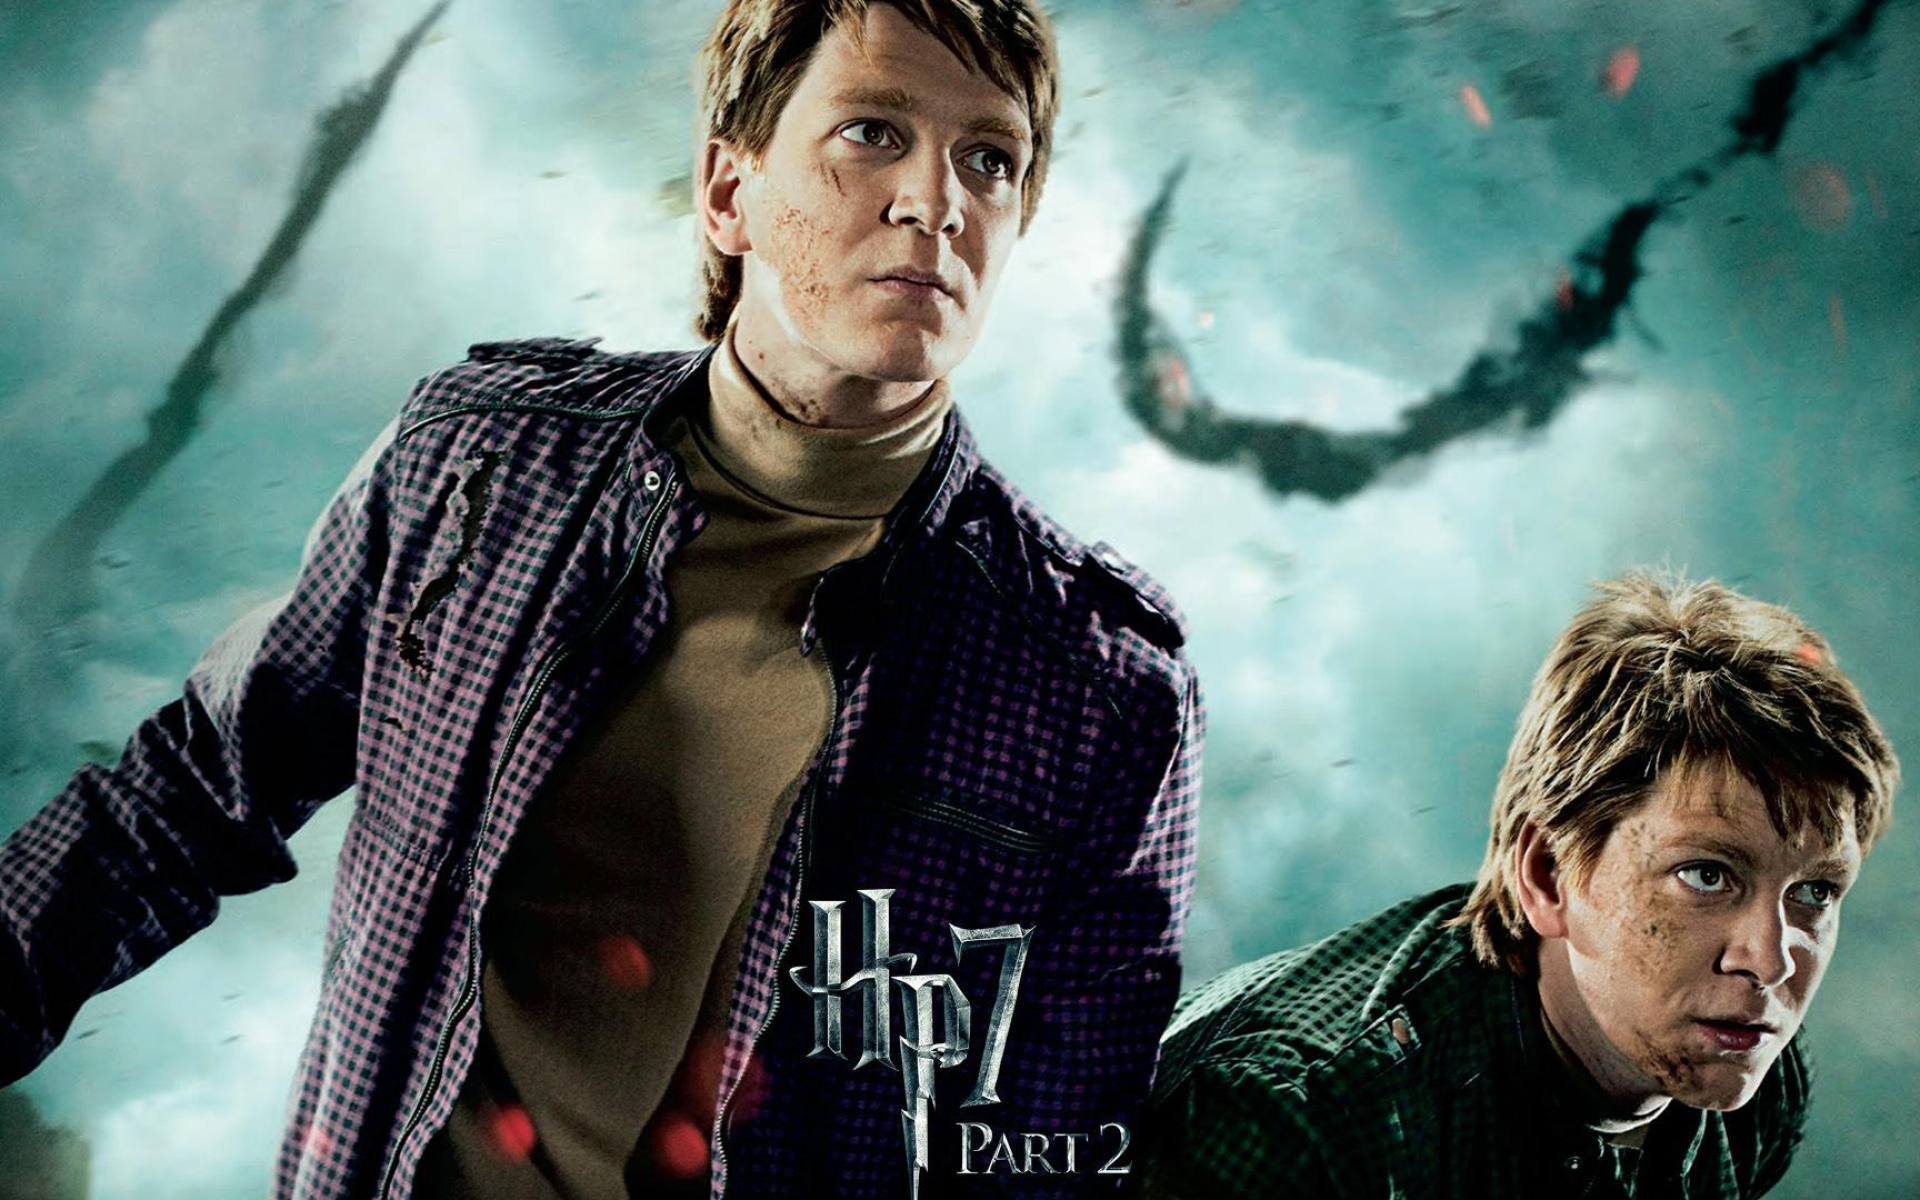 Fred Weasley, Weasley twins, Harry Potter wallpapers, Background images, 1920x1200 HD Desktop